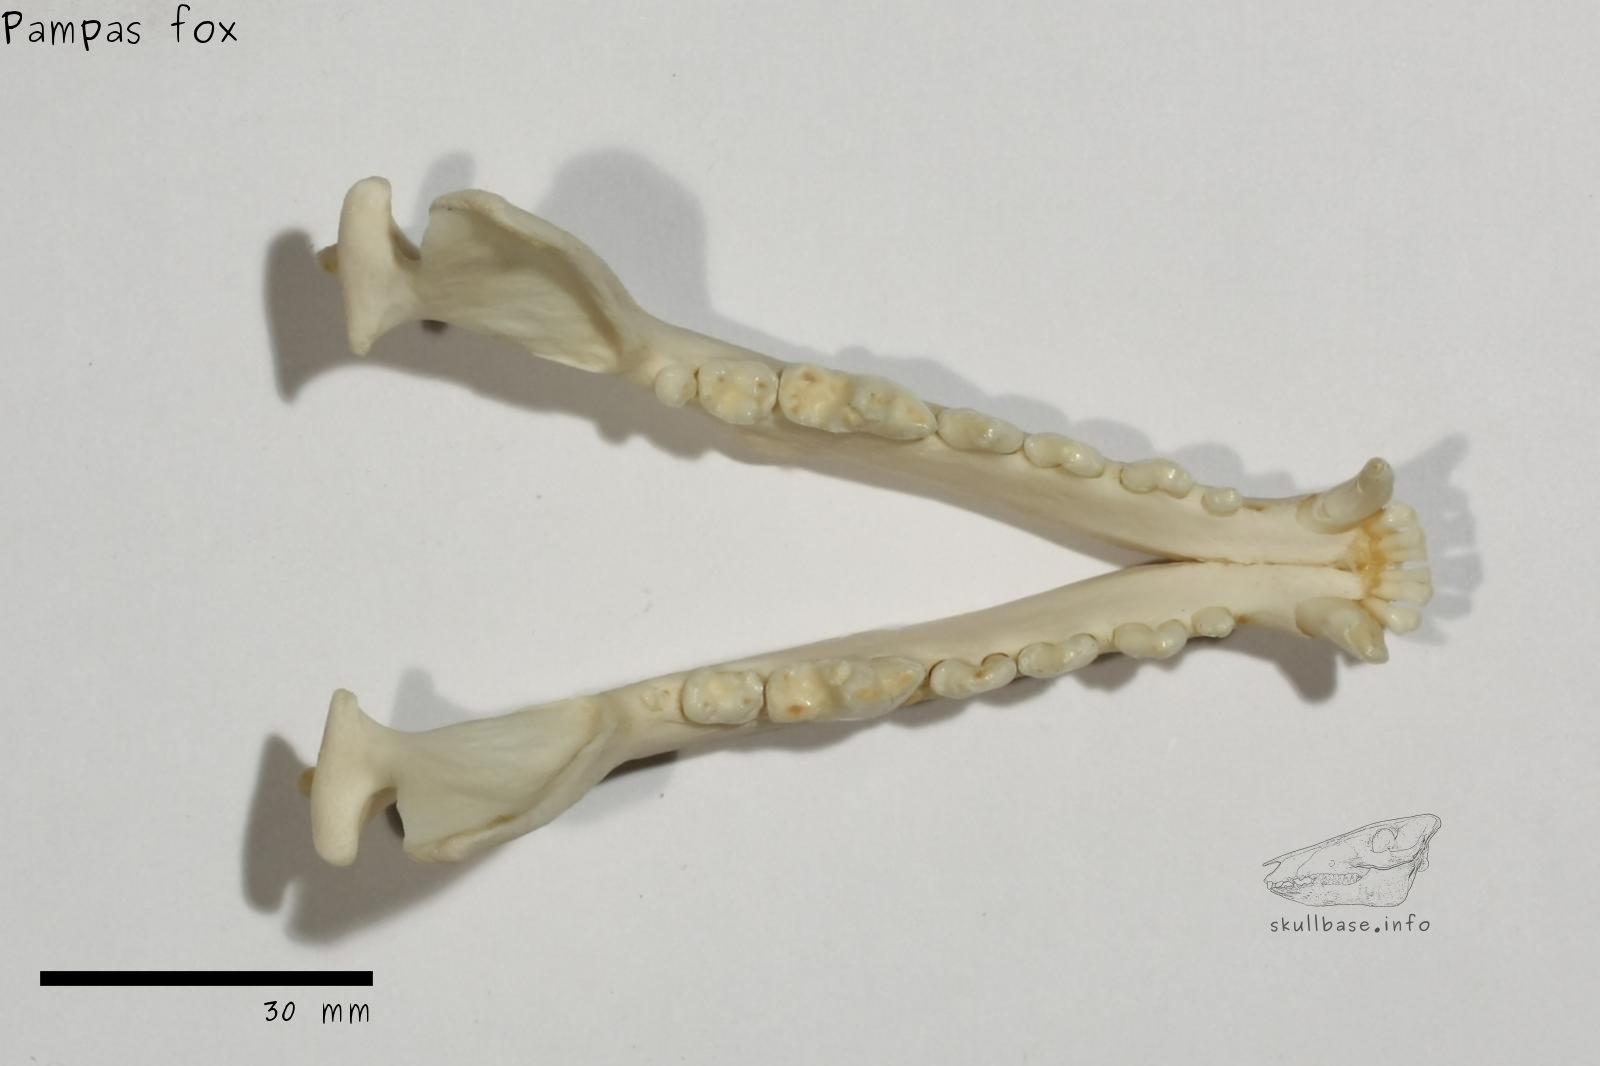 Pampas fox (Lycalopex gymnocercus) jaw